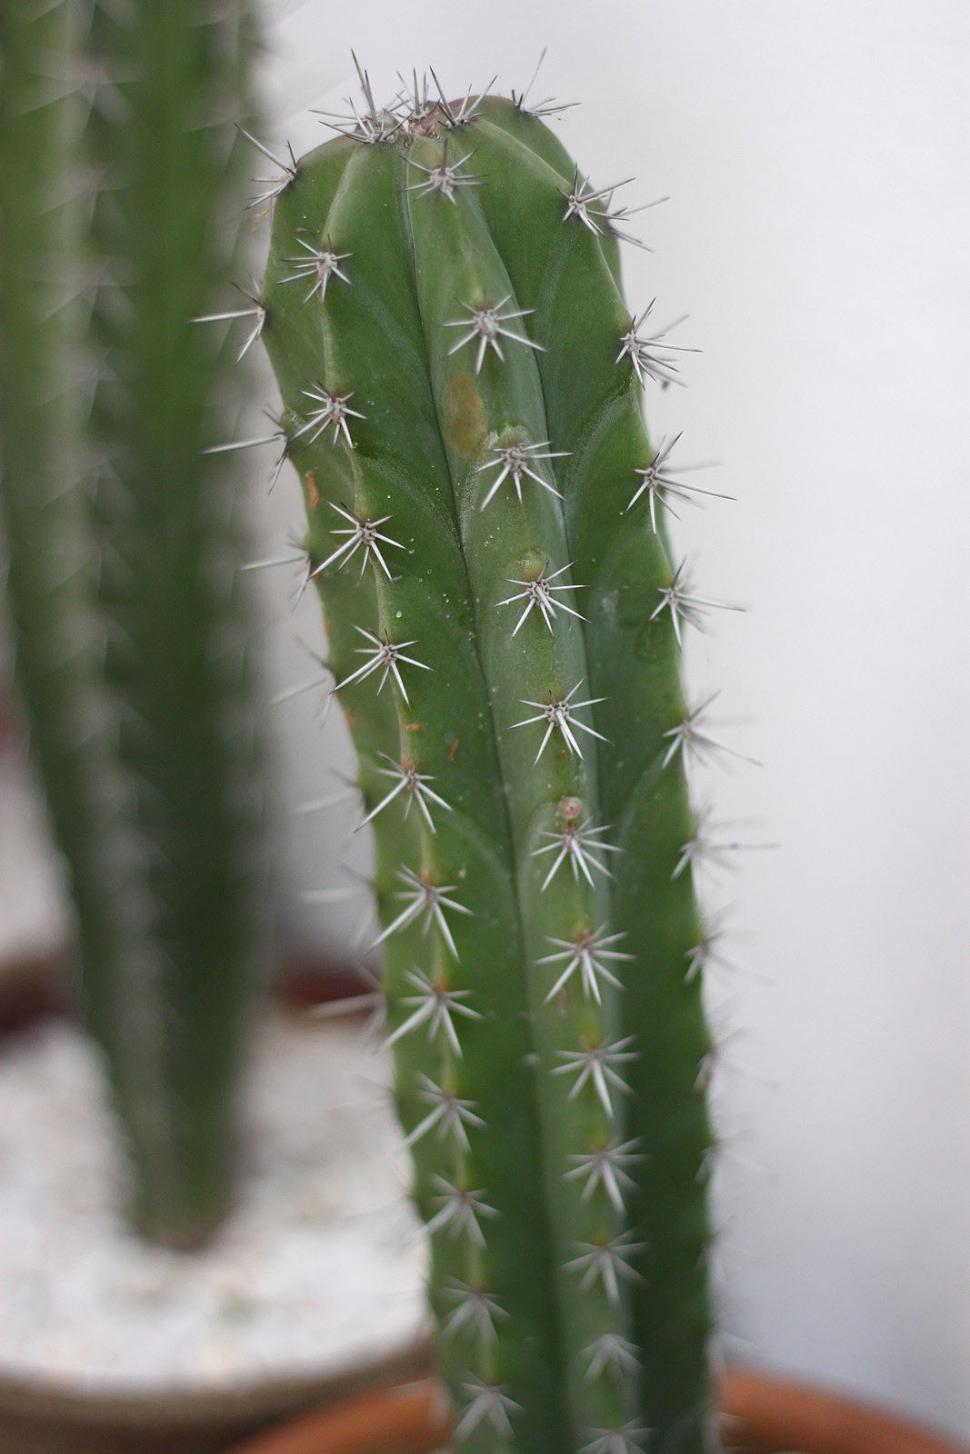 Free Image of cactus 